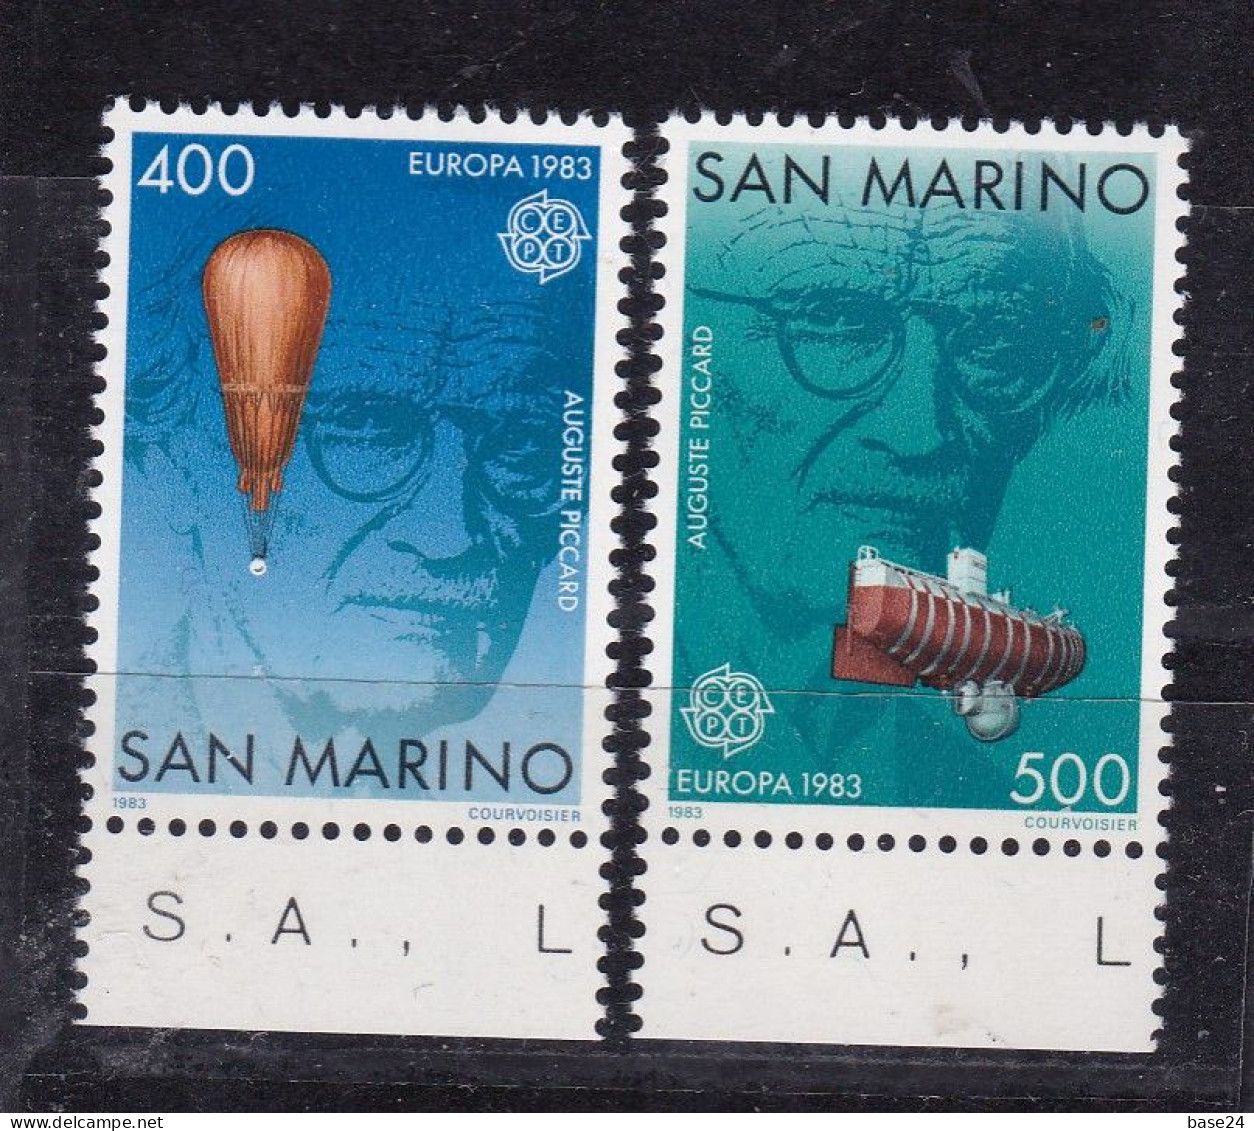 1983 San Marino Saint Marin EUROPA CEPT EUROPE Serie Di 2 Valori MNH** Opere Del Genio Umano, Human Genius Works - 1983